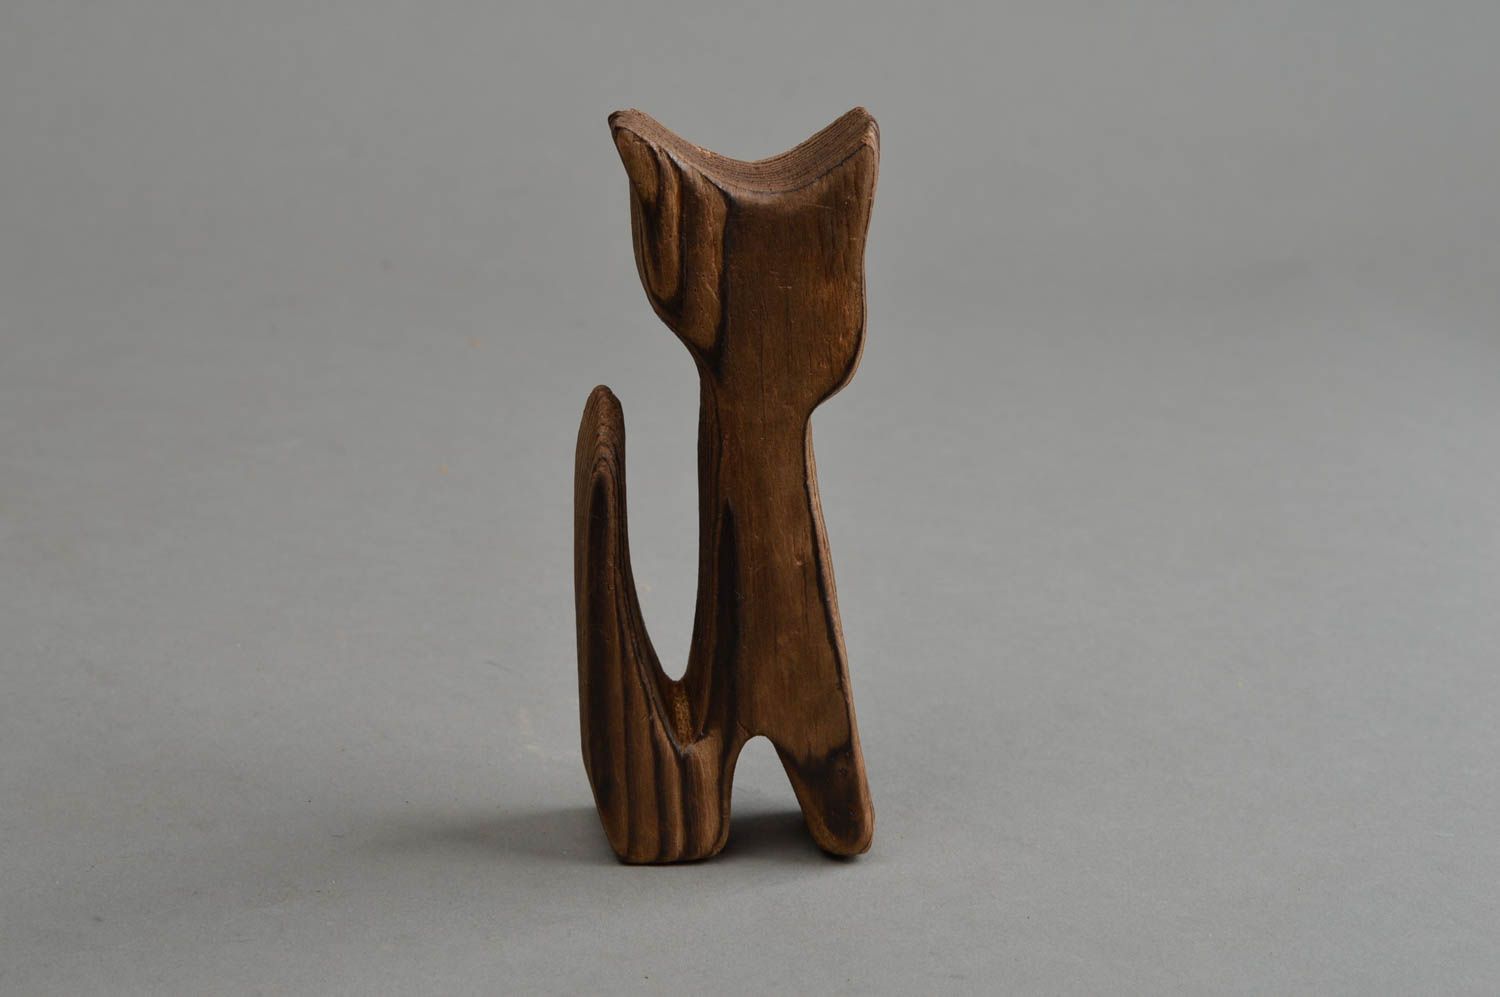 Small handcrafted wooden figurine decorative statuette home design ideas photo 2